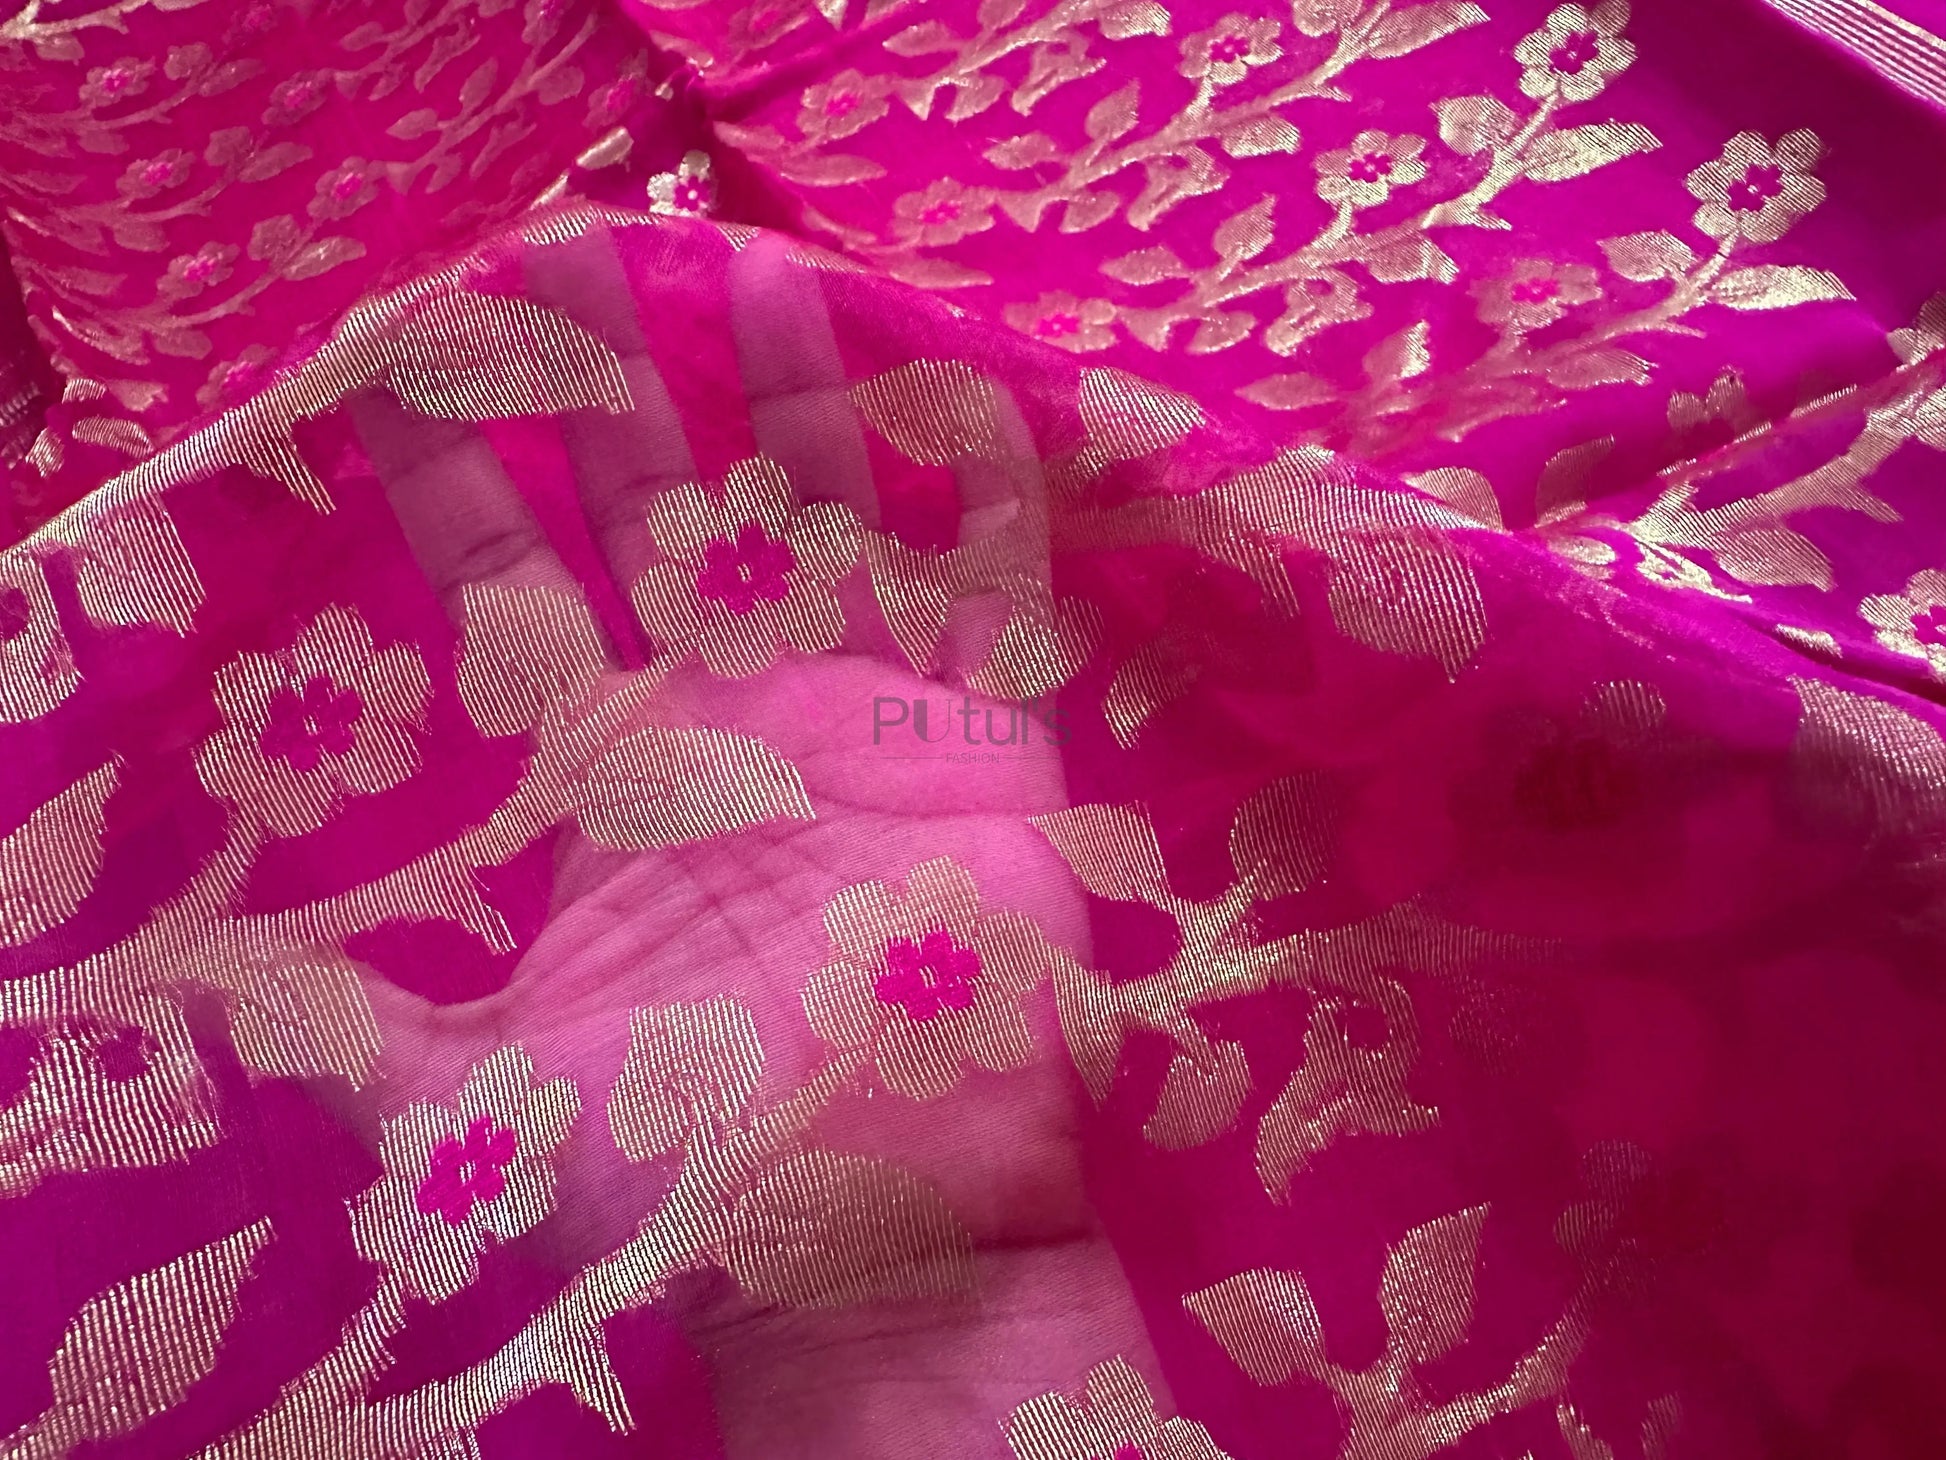 Rani coloured Muslin saree of golden meenakari work Putul's Fashion